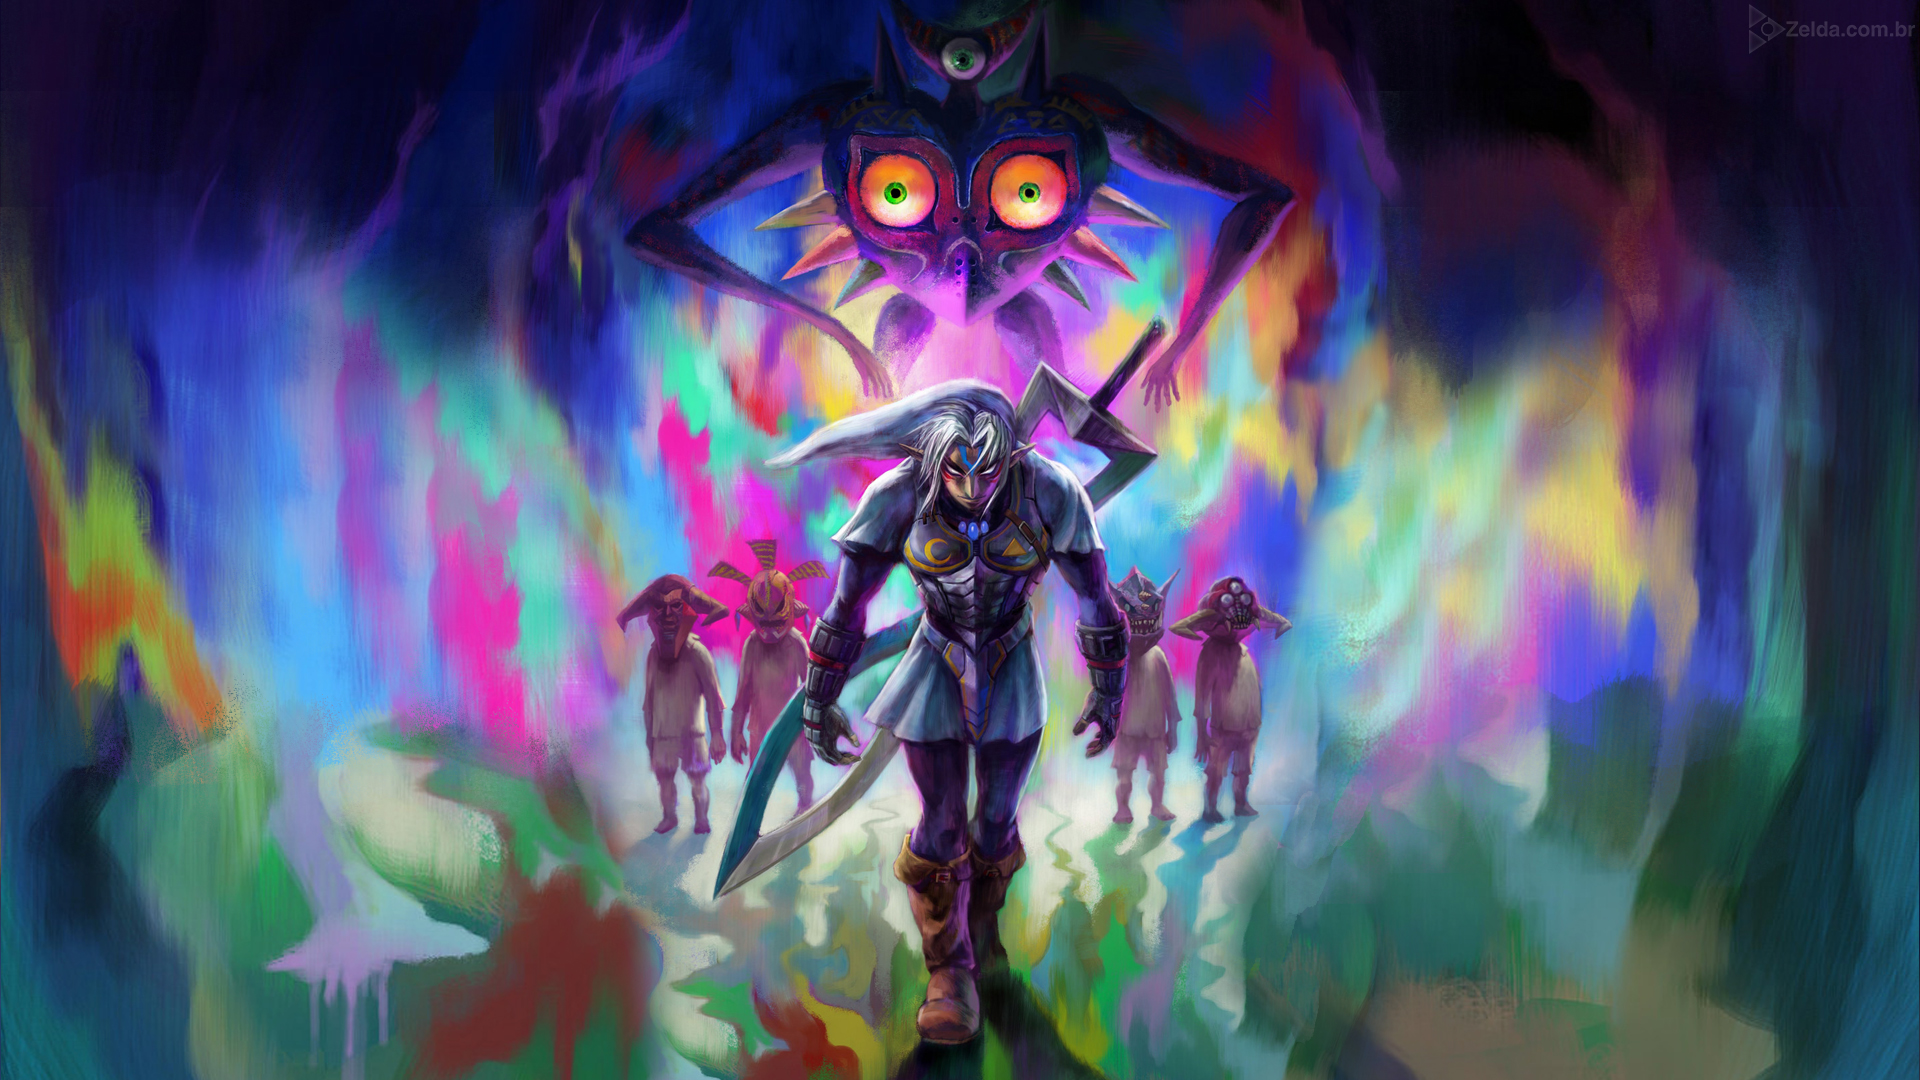 majora's mask wallpaper,purple,art,fictional character,illustration,cg artwork